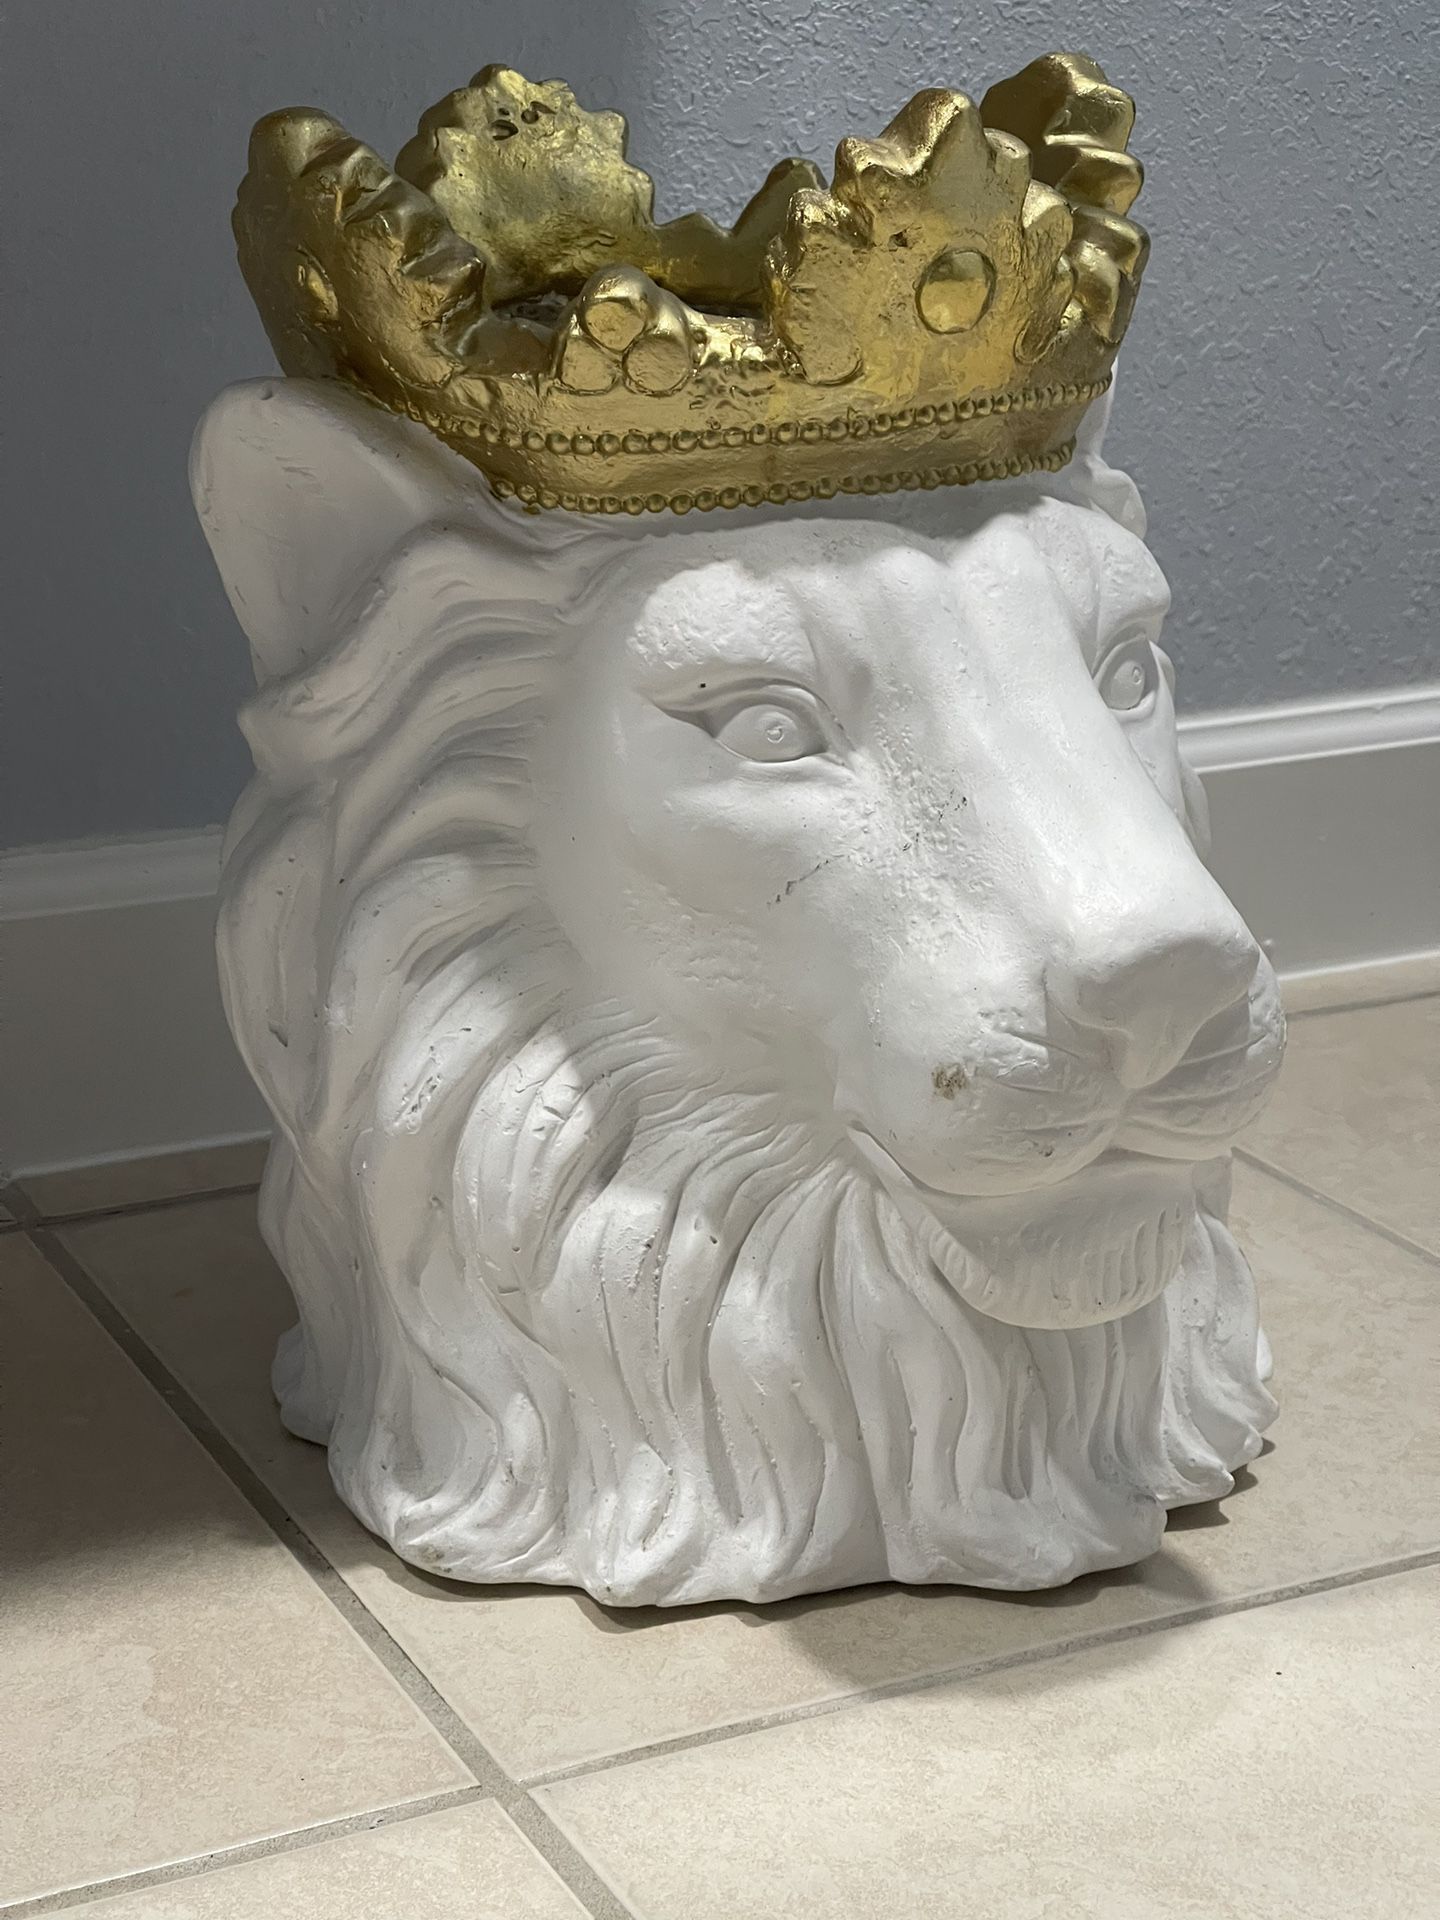 Lion heads